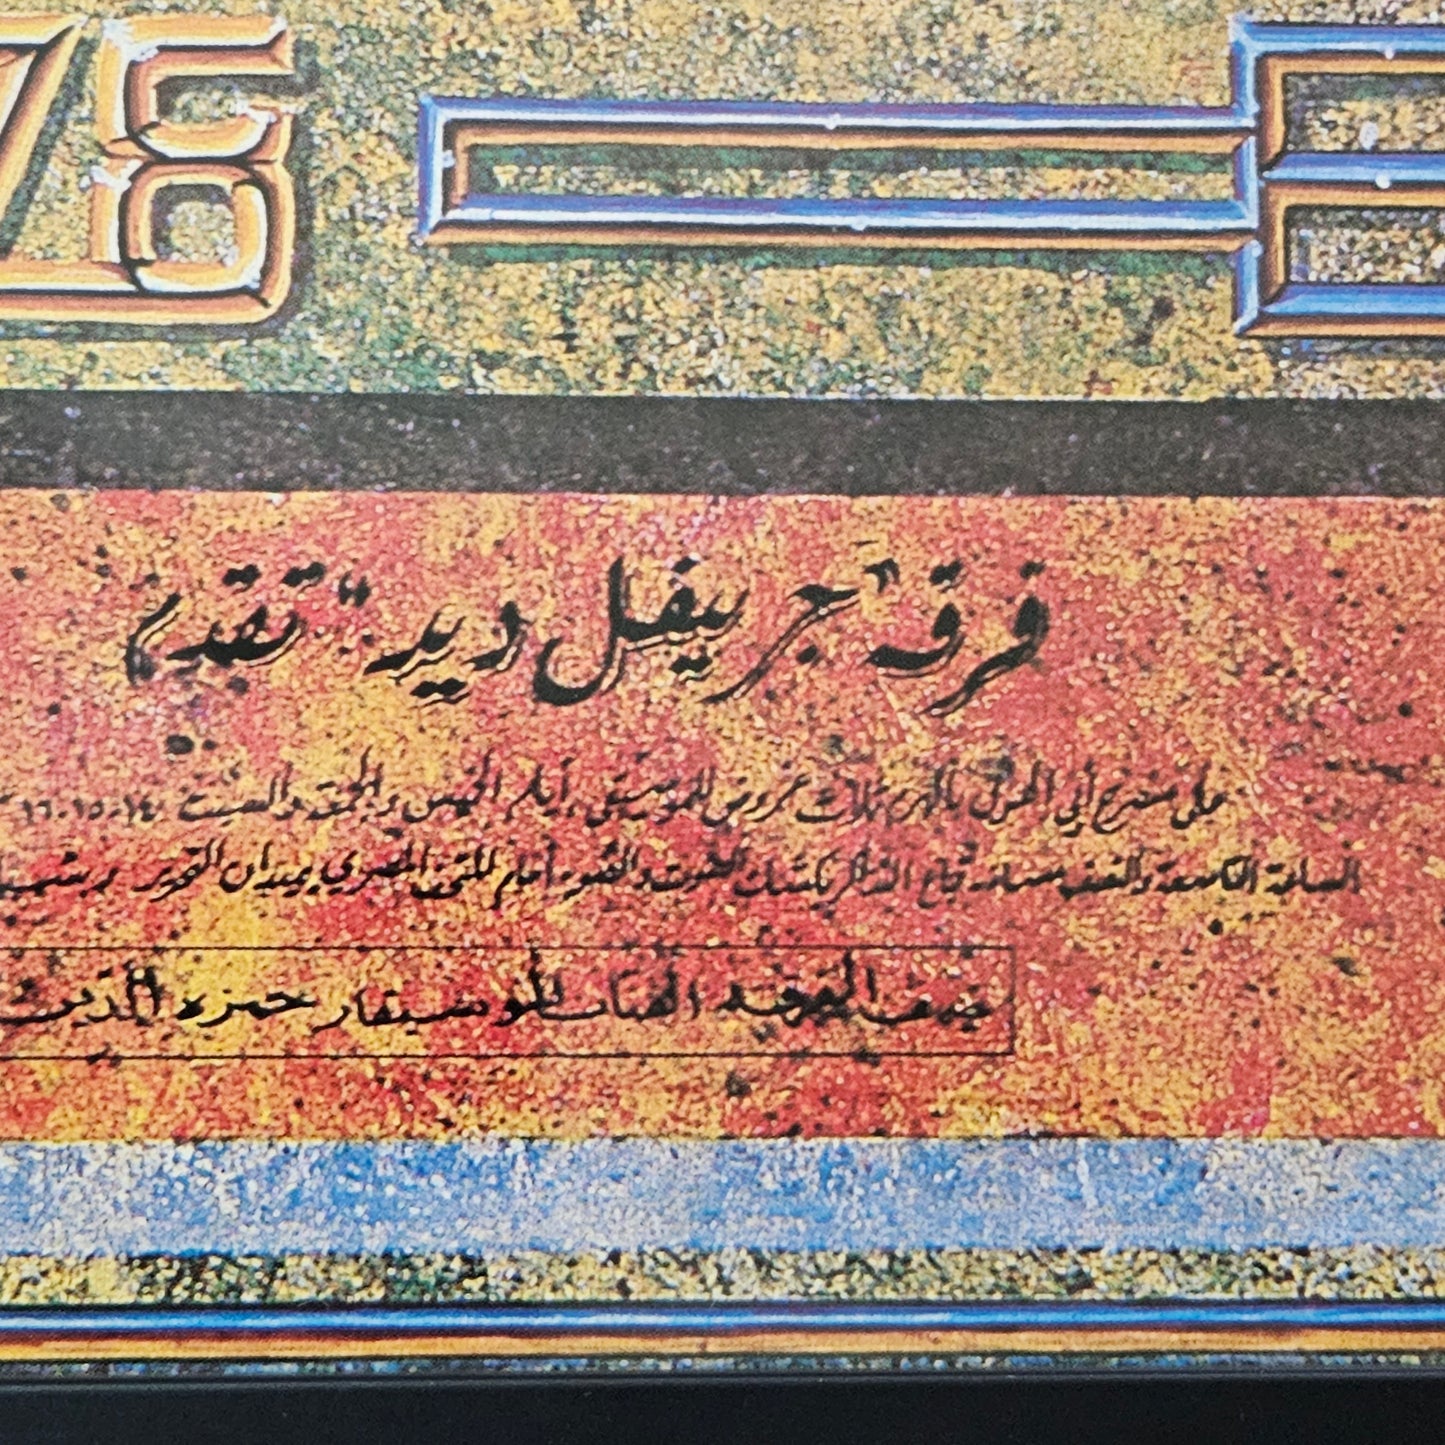 Alton Kelley Grateful Dead, Egypt 1978 Framed Poster